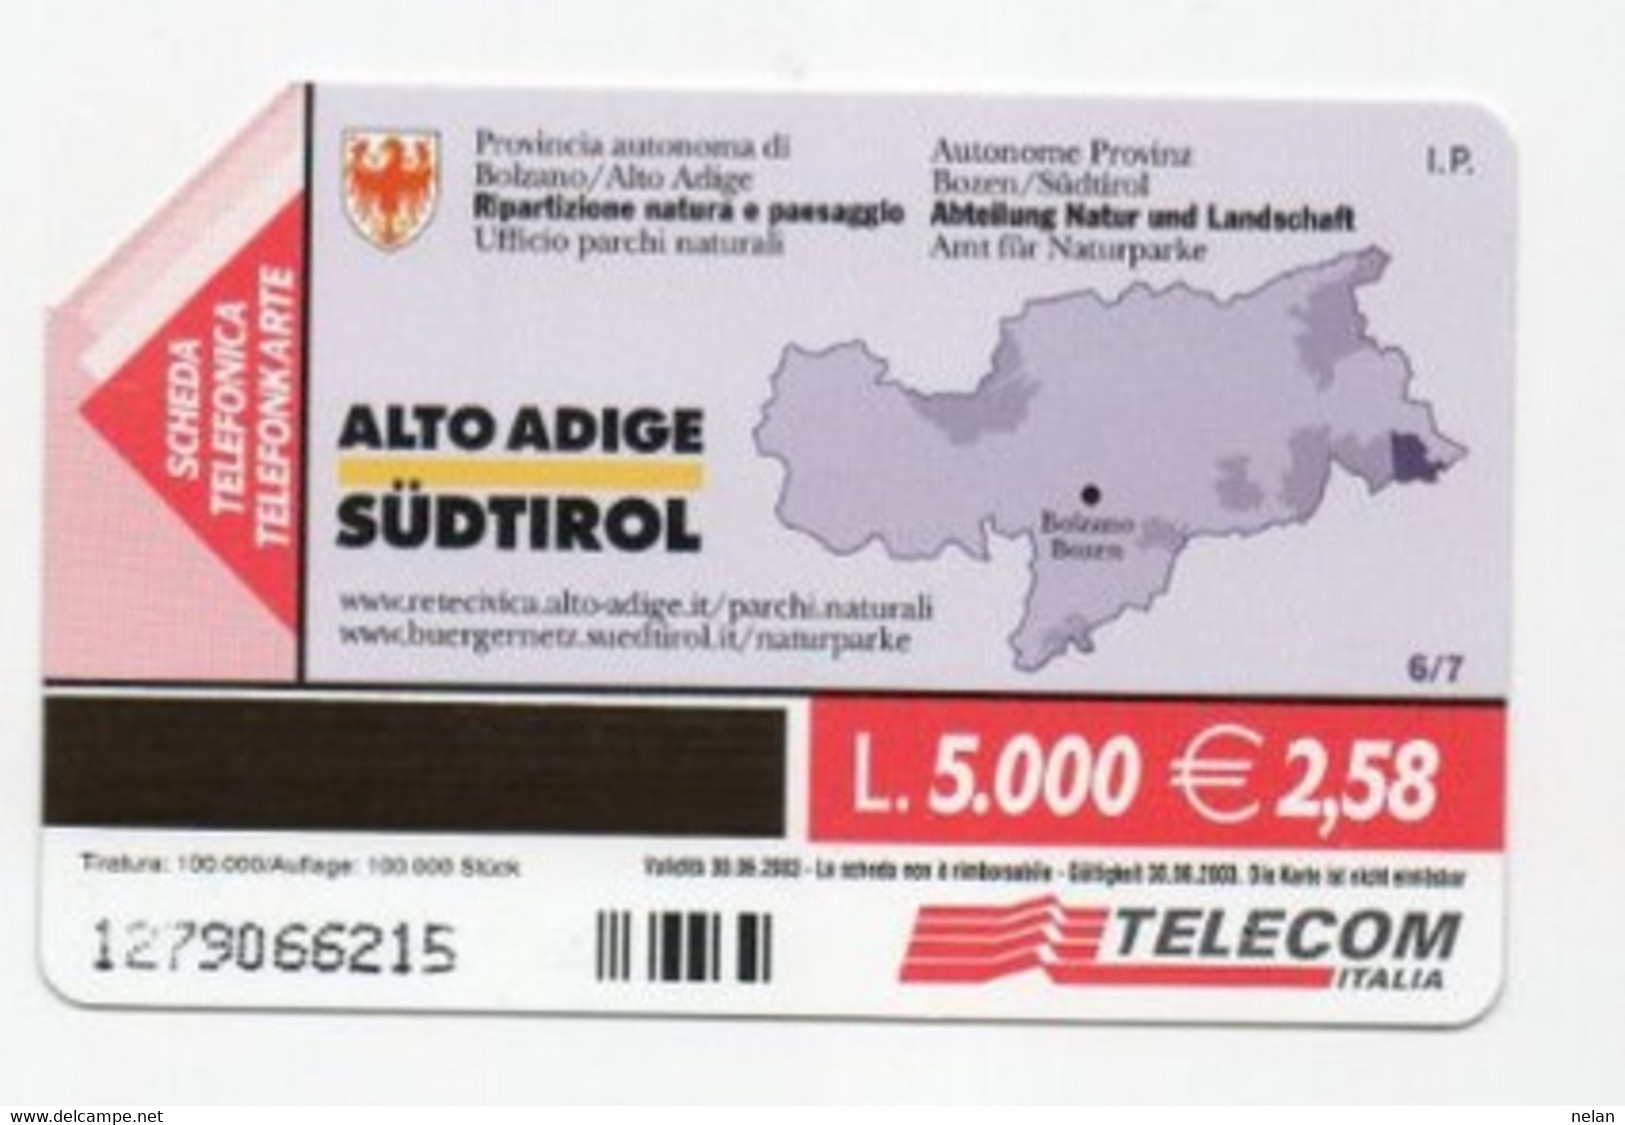 SCHEDA TELEFONICA - PHONE CARD - ITALIA - TELECOM - ALTO ADIGE - Bergen